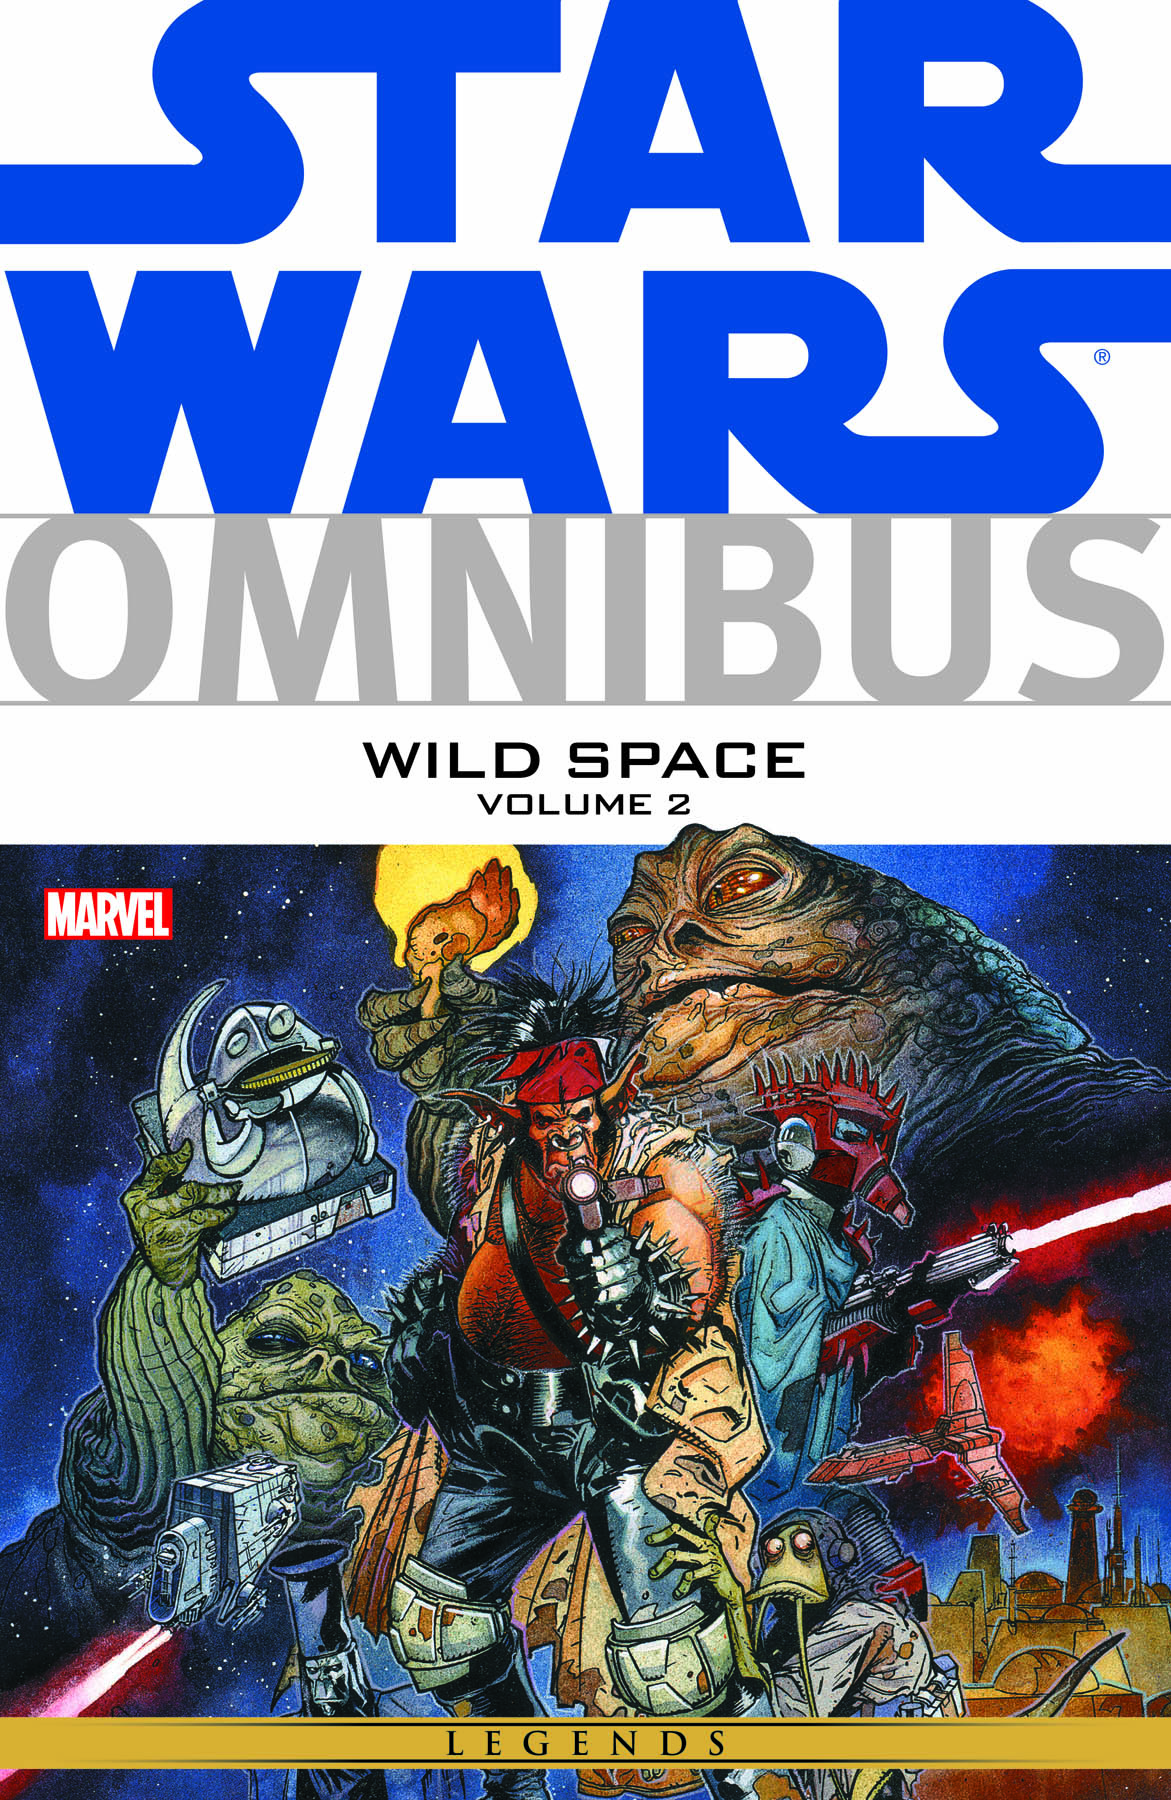 Star Wars Omnibus Wild Space Vol. 2 (Trade Paperback)